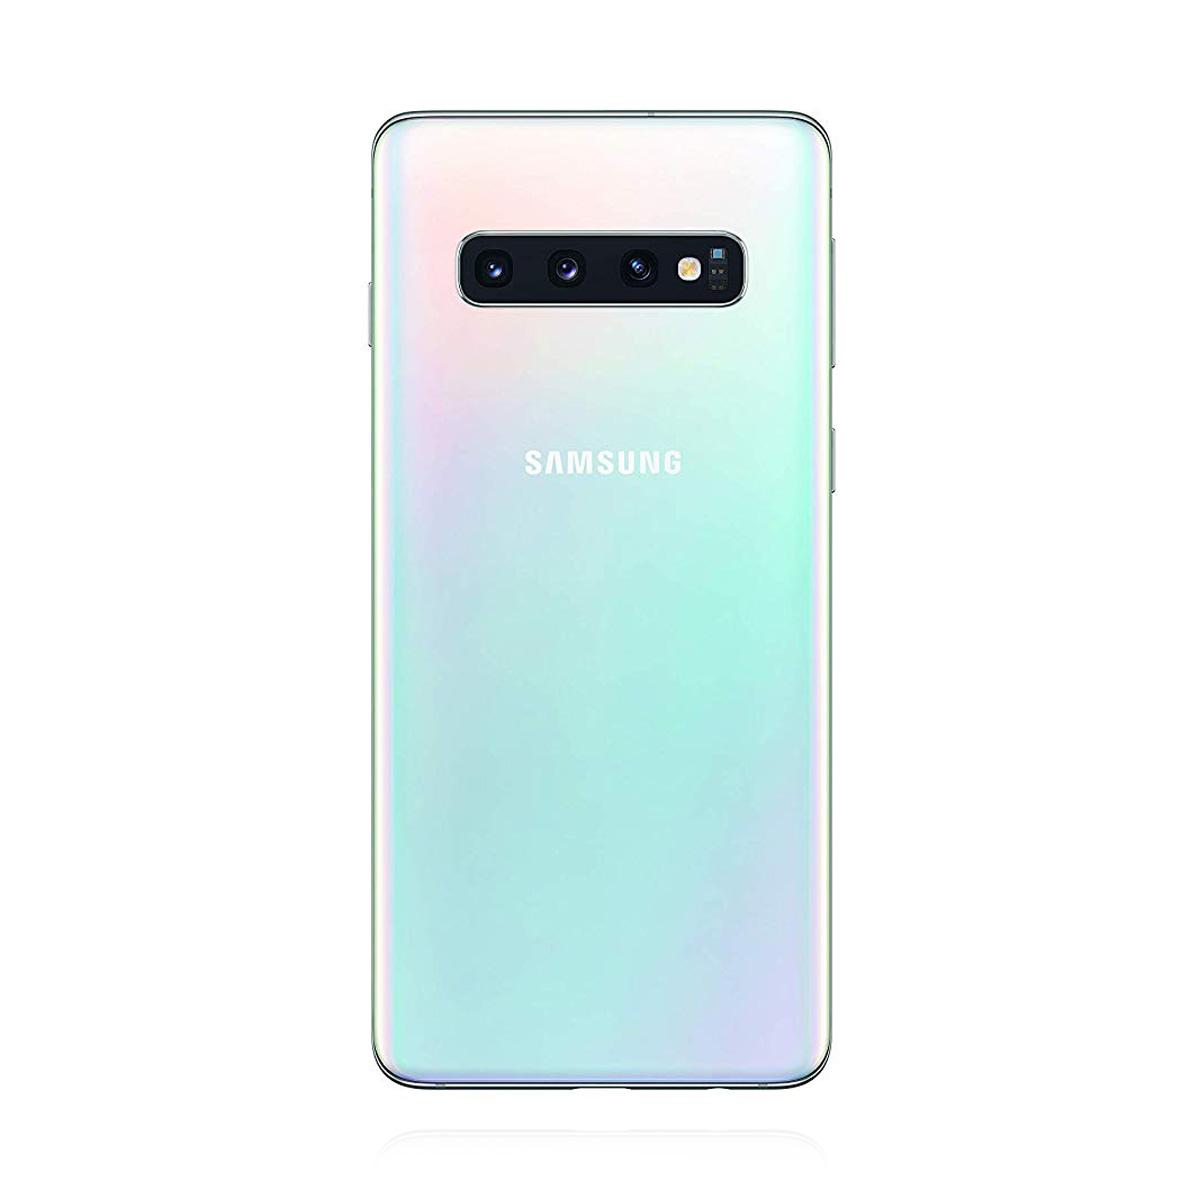 Samsung Galaxy S10 128GB SM-G973F/DS